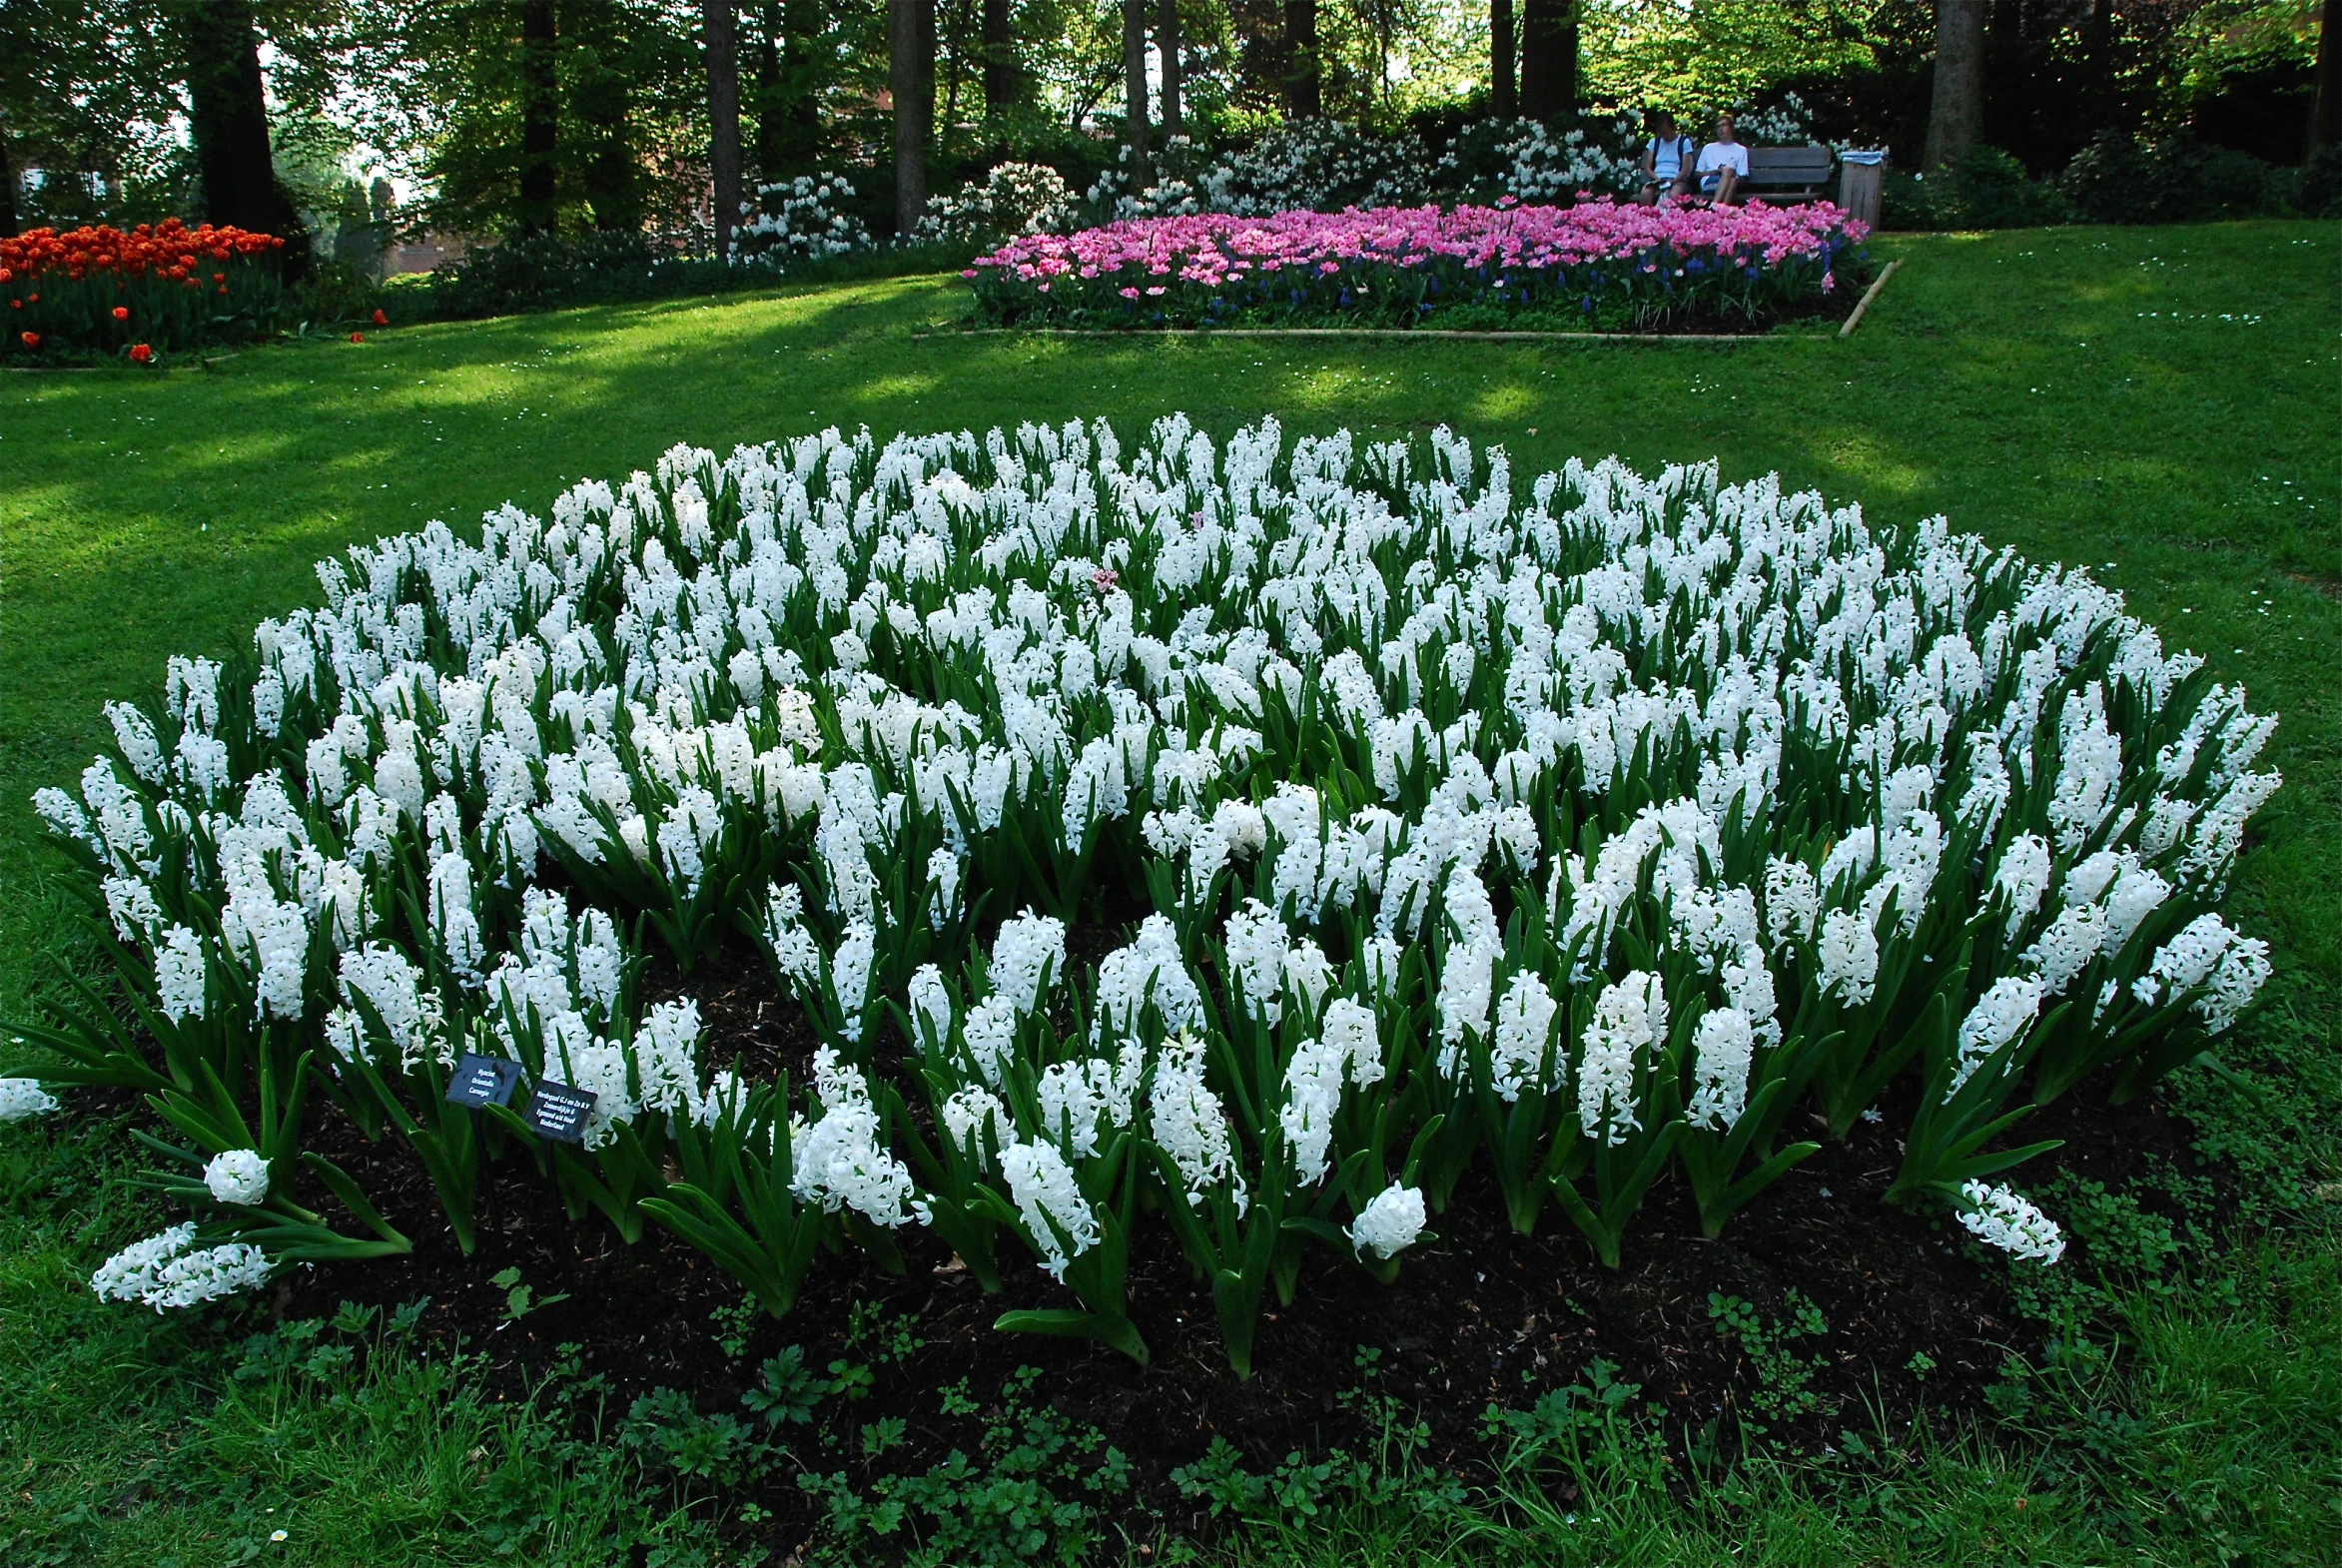 white flowers in a circular circular garden display in the grass